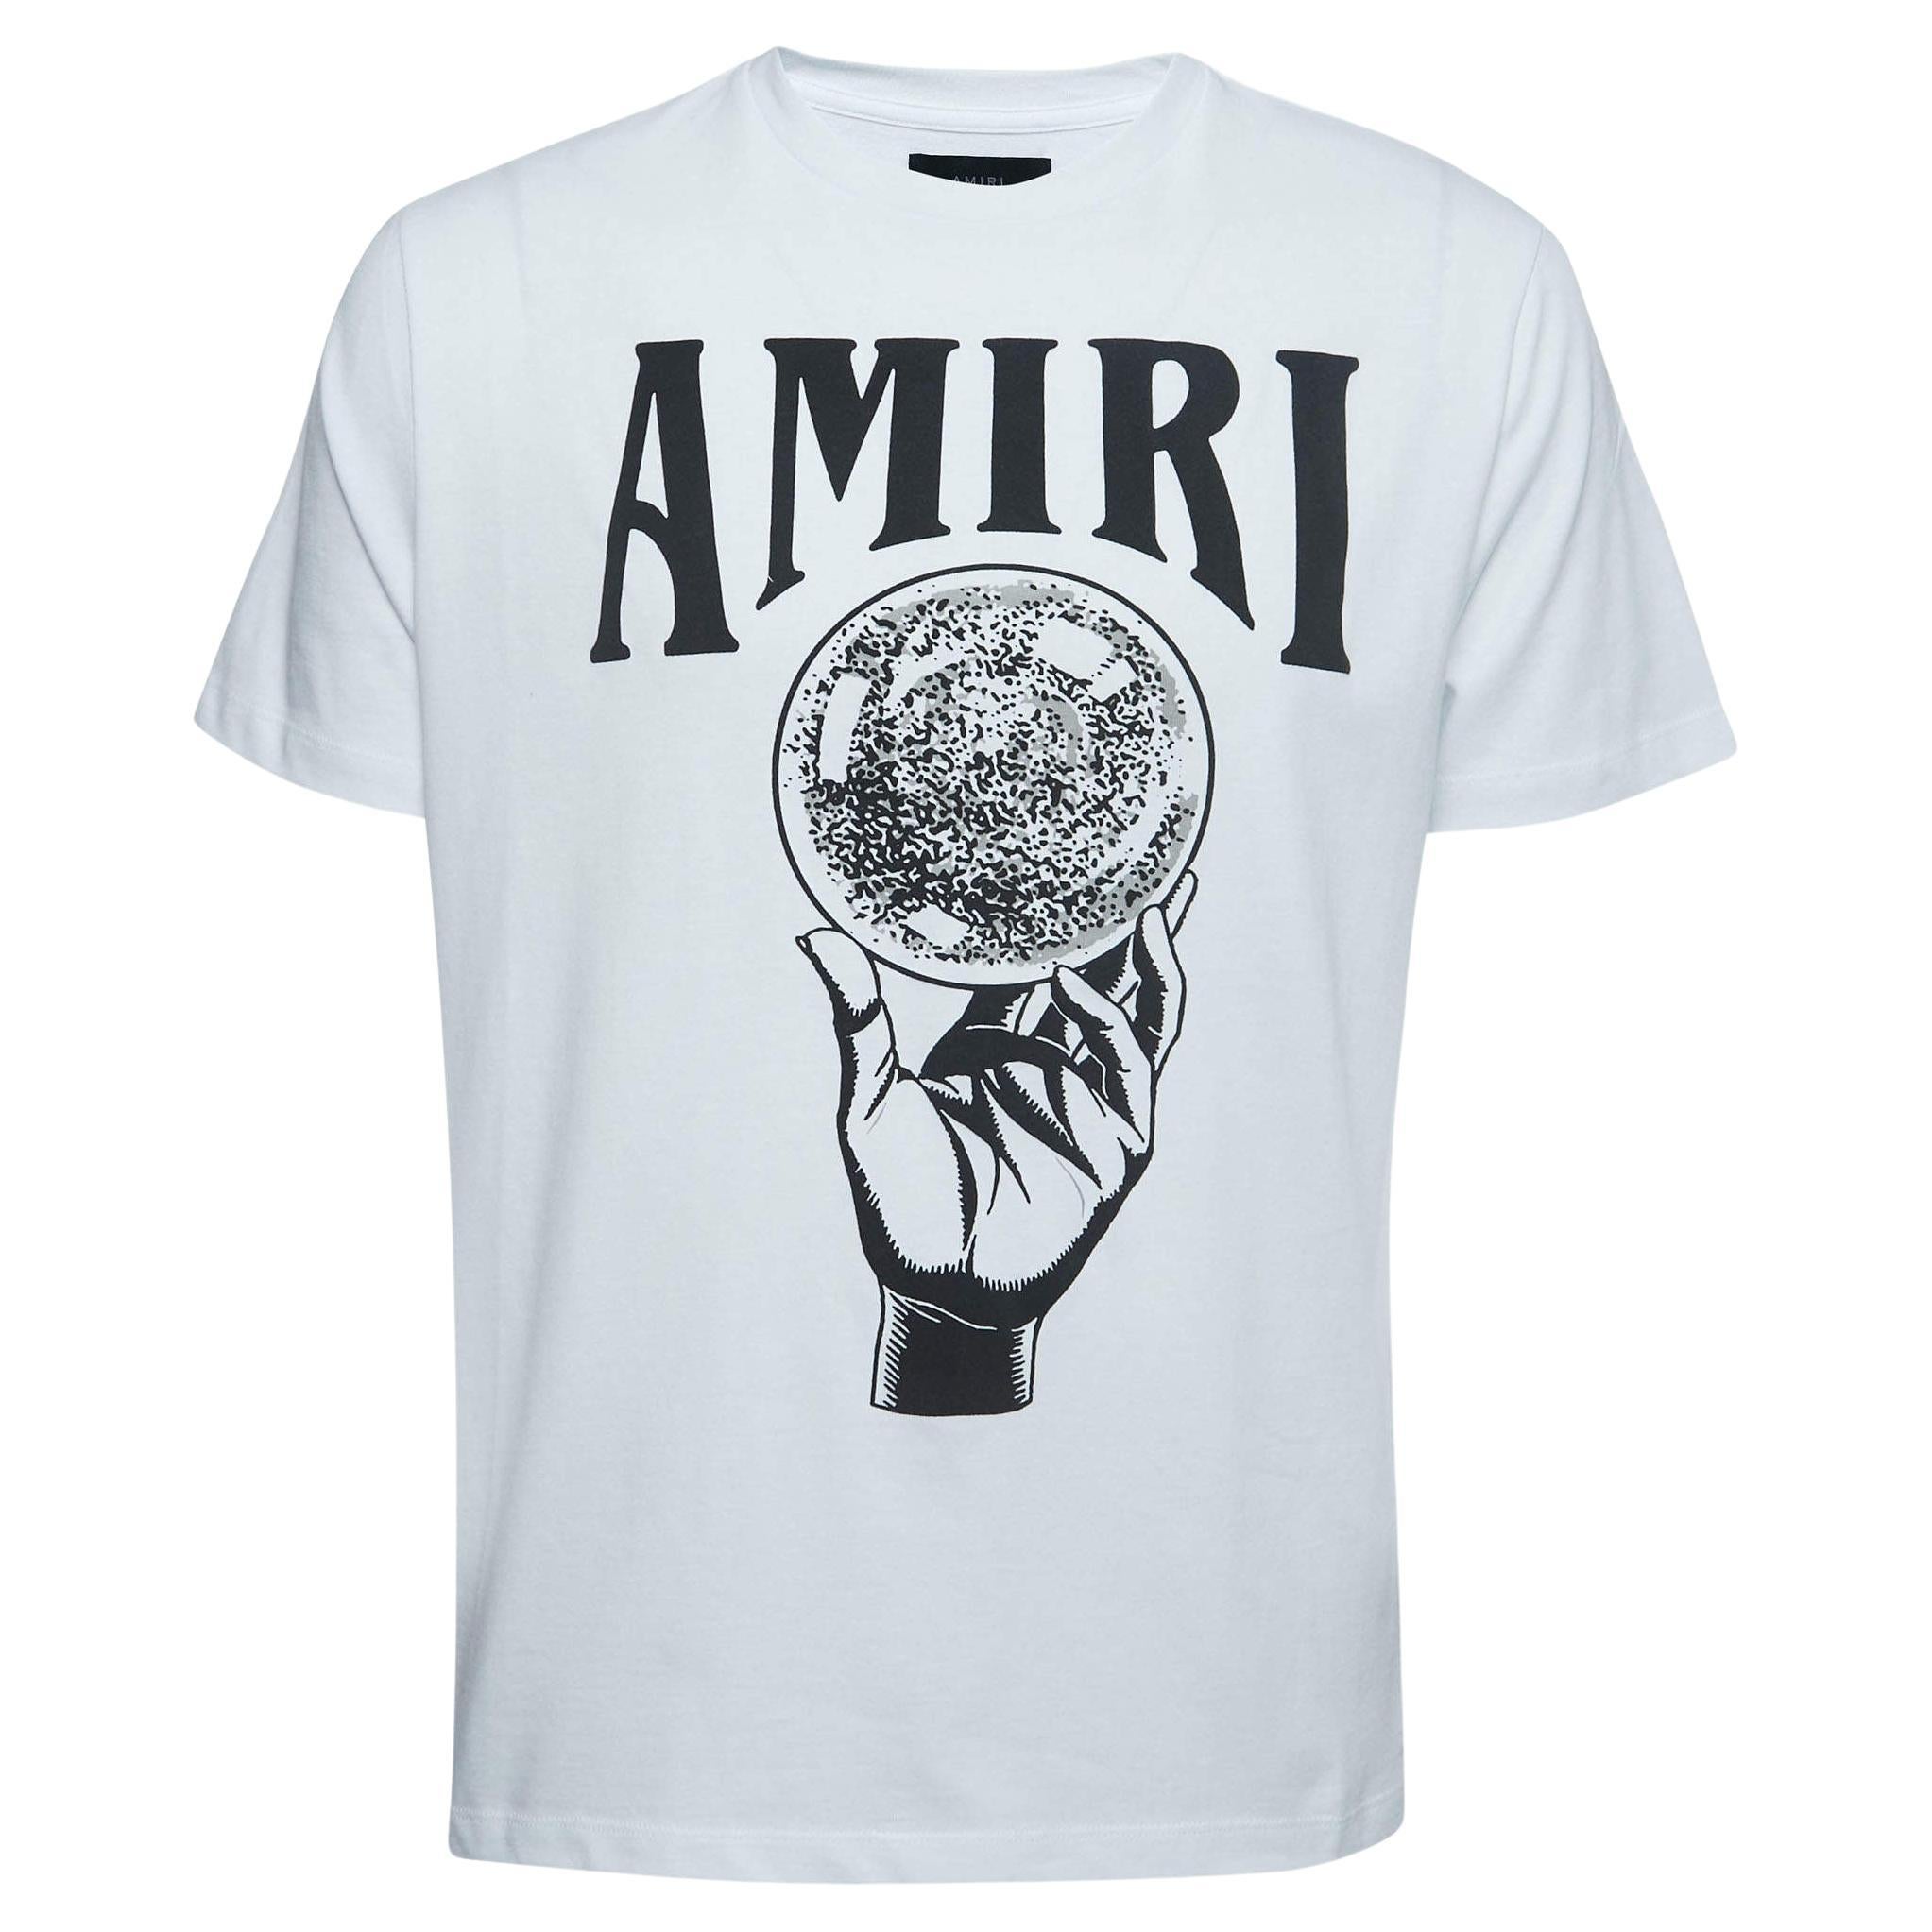 Amiri White Cotton Crystal Ball Print T-Shirt S For Sale